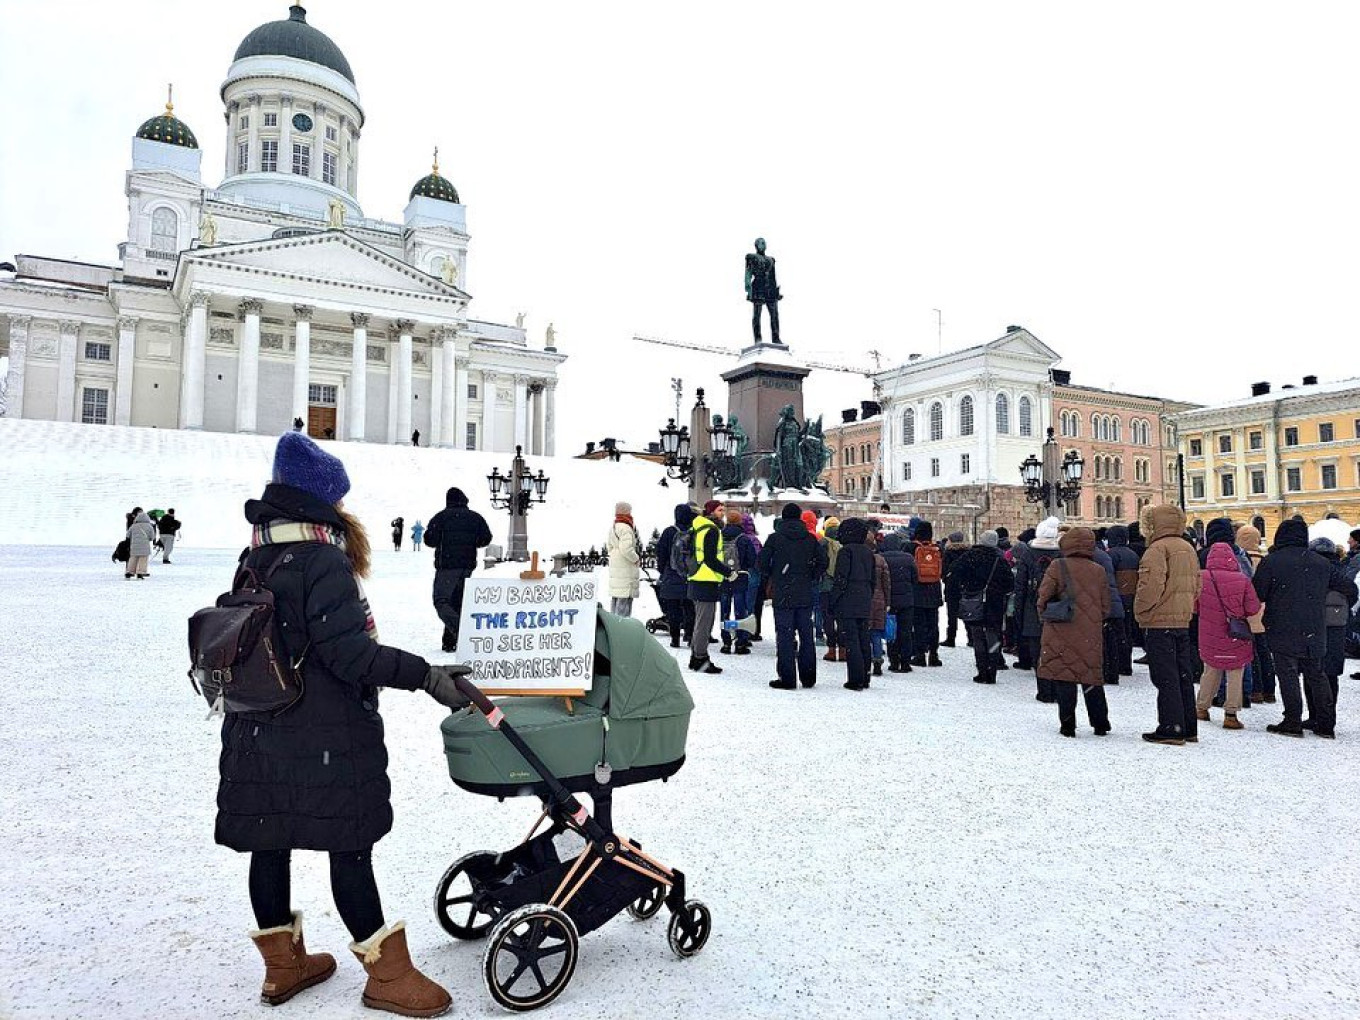 
					Members of the Alexander Society hold a demonstration in Helsinki.					 					aleksanterinliitto / Instagram				